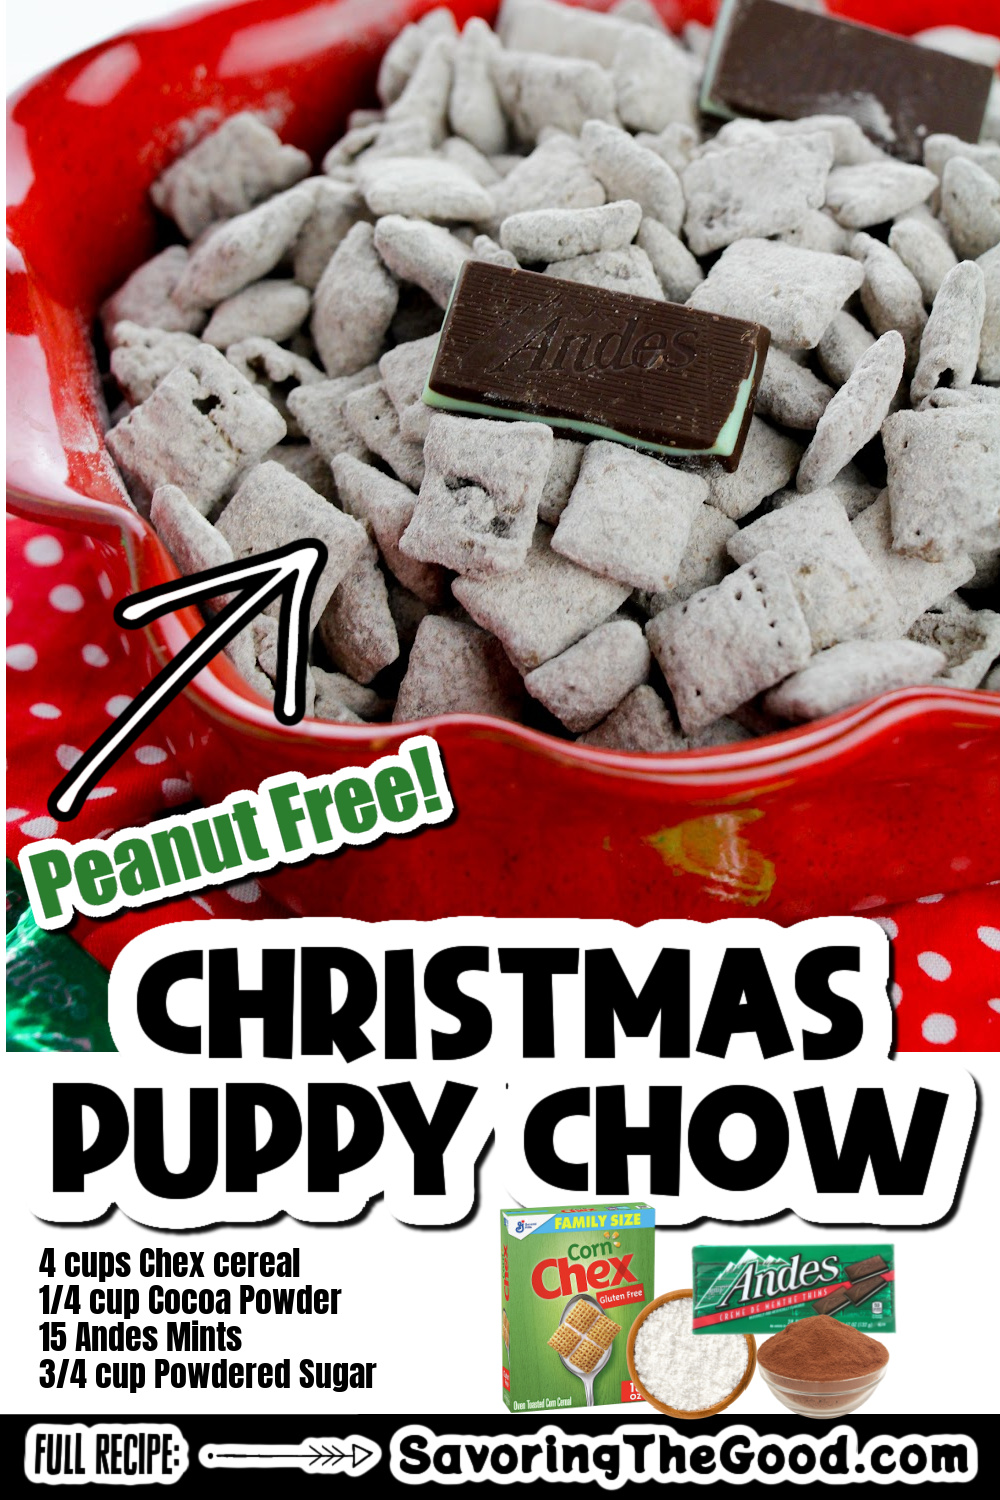 Peanut free christmas puppy chow.